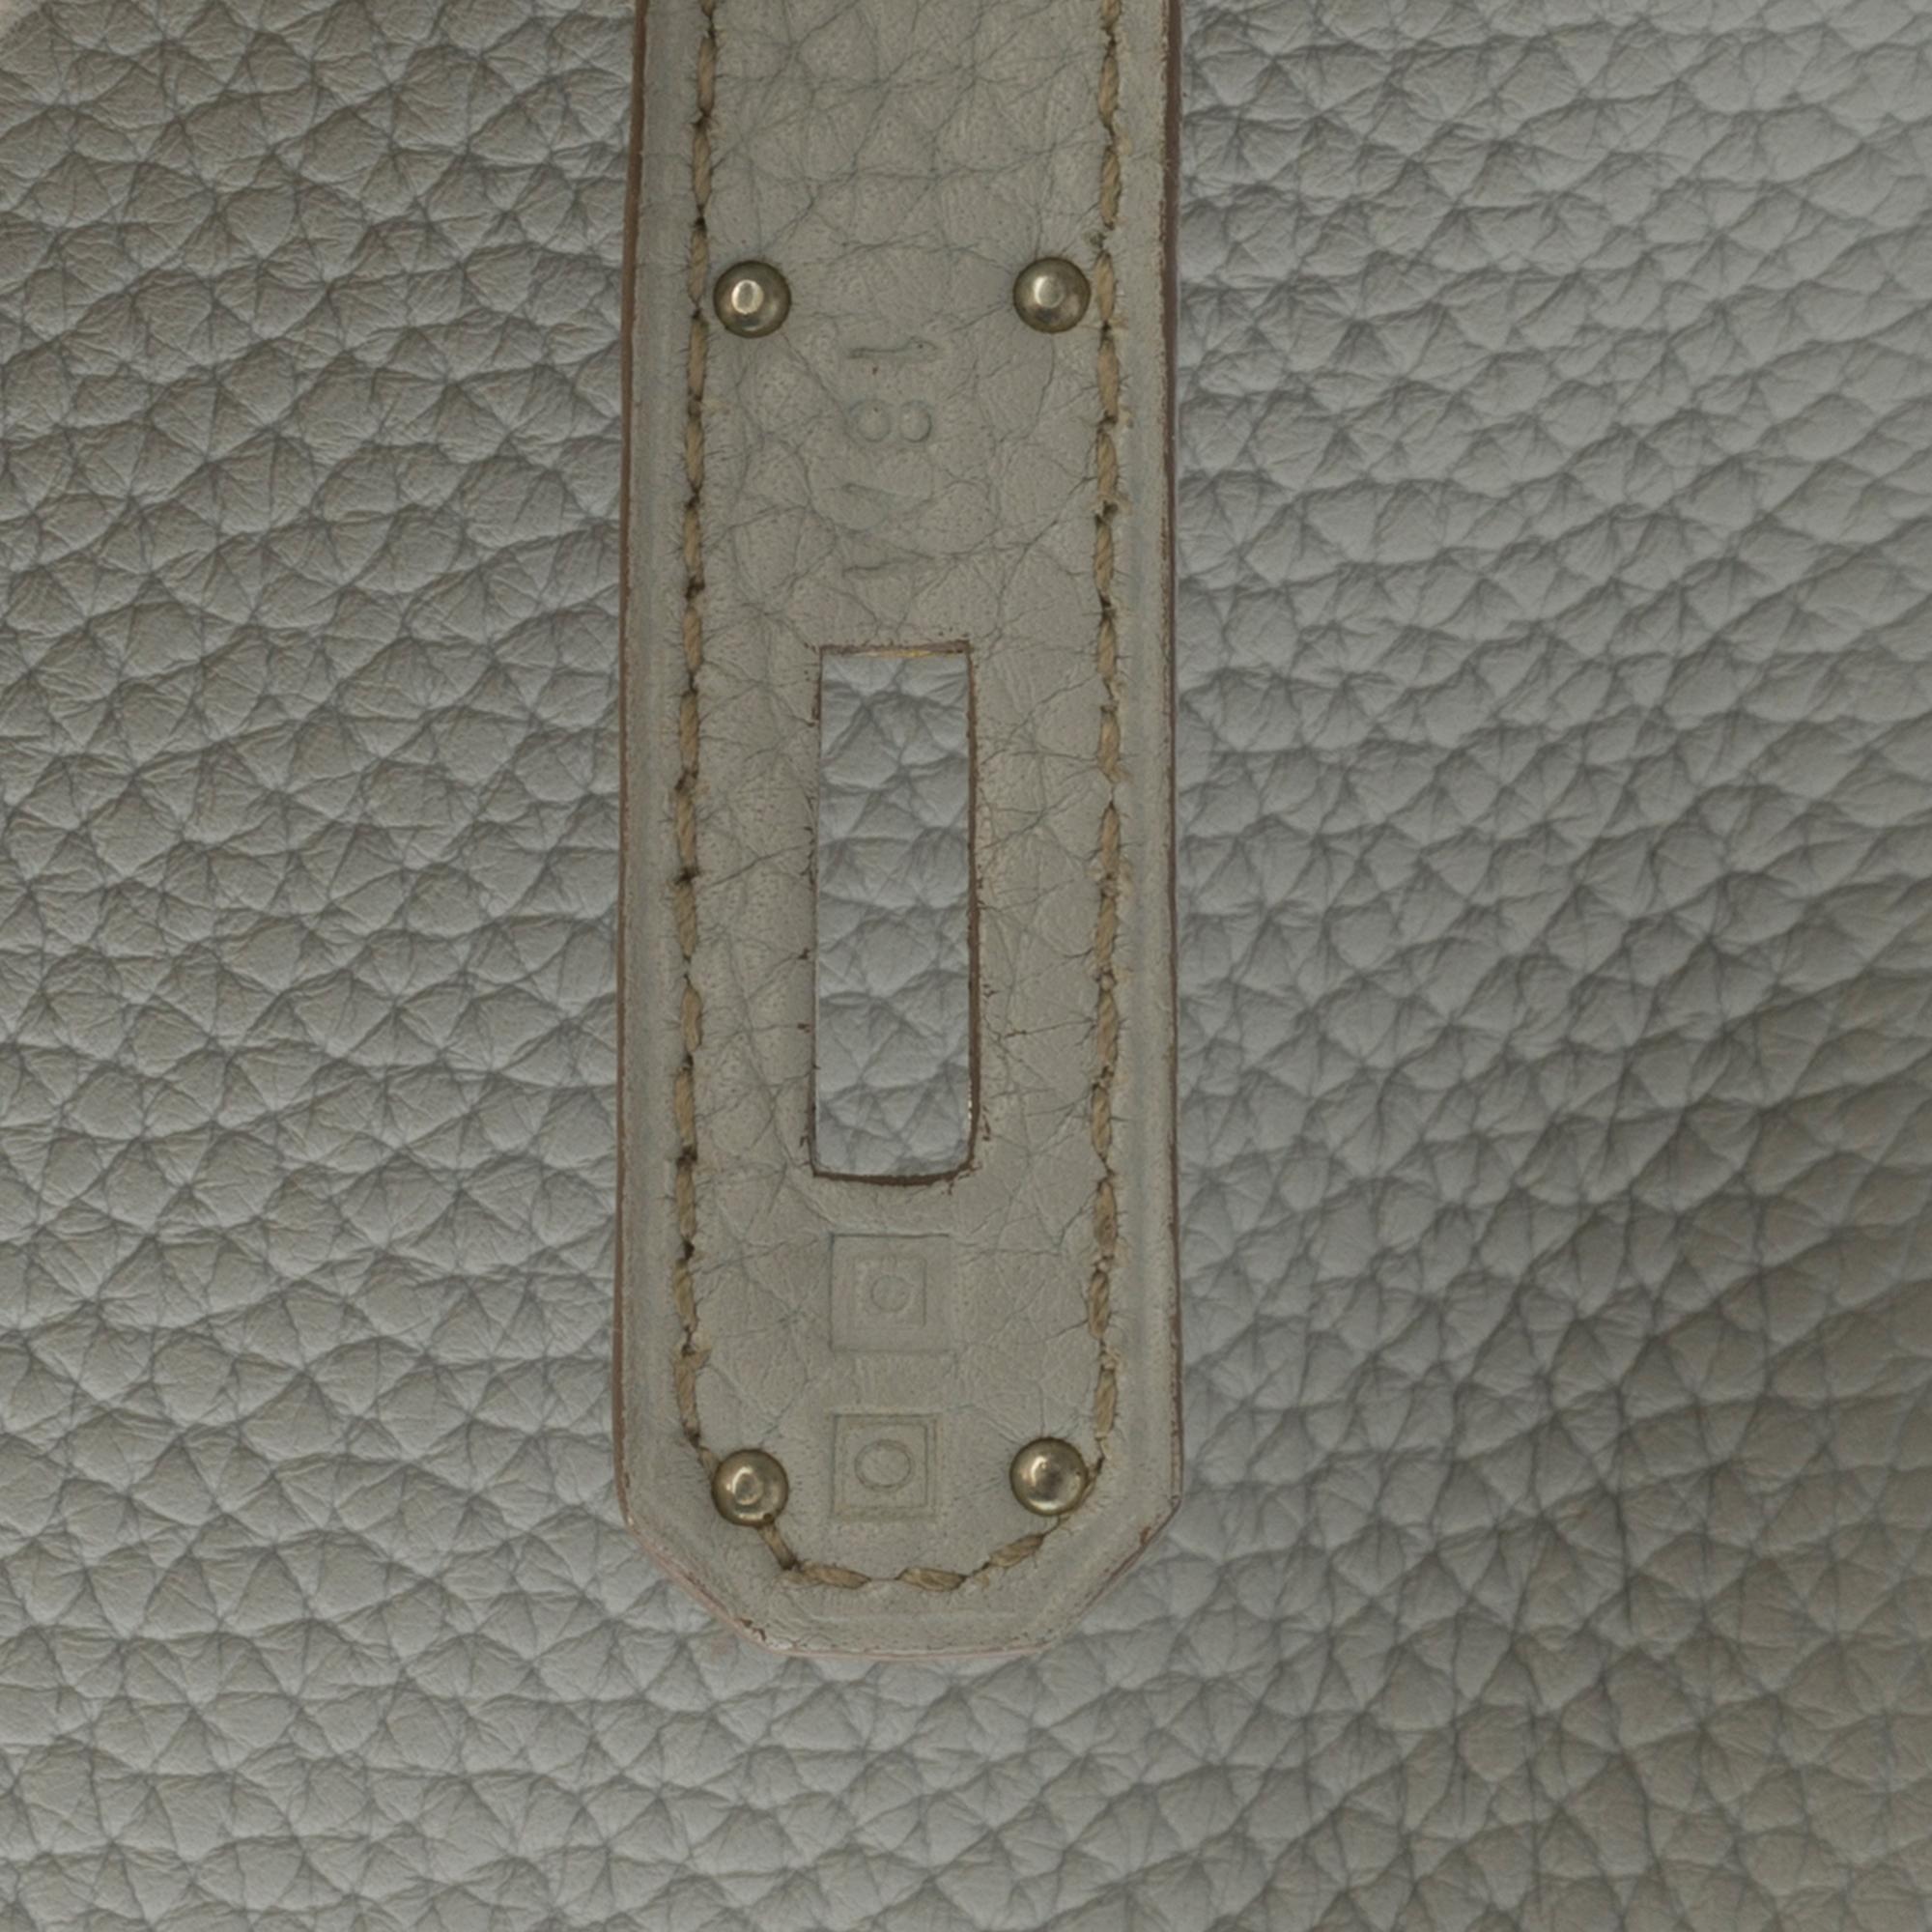 Women's Rare Hermès Birkin Club 35 handbag in grey, white leather and blue lizard, SHW